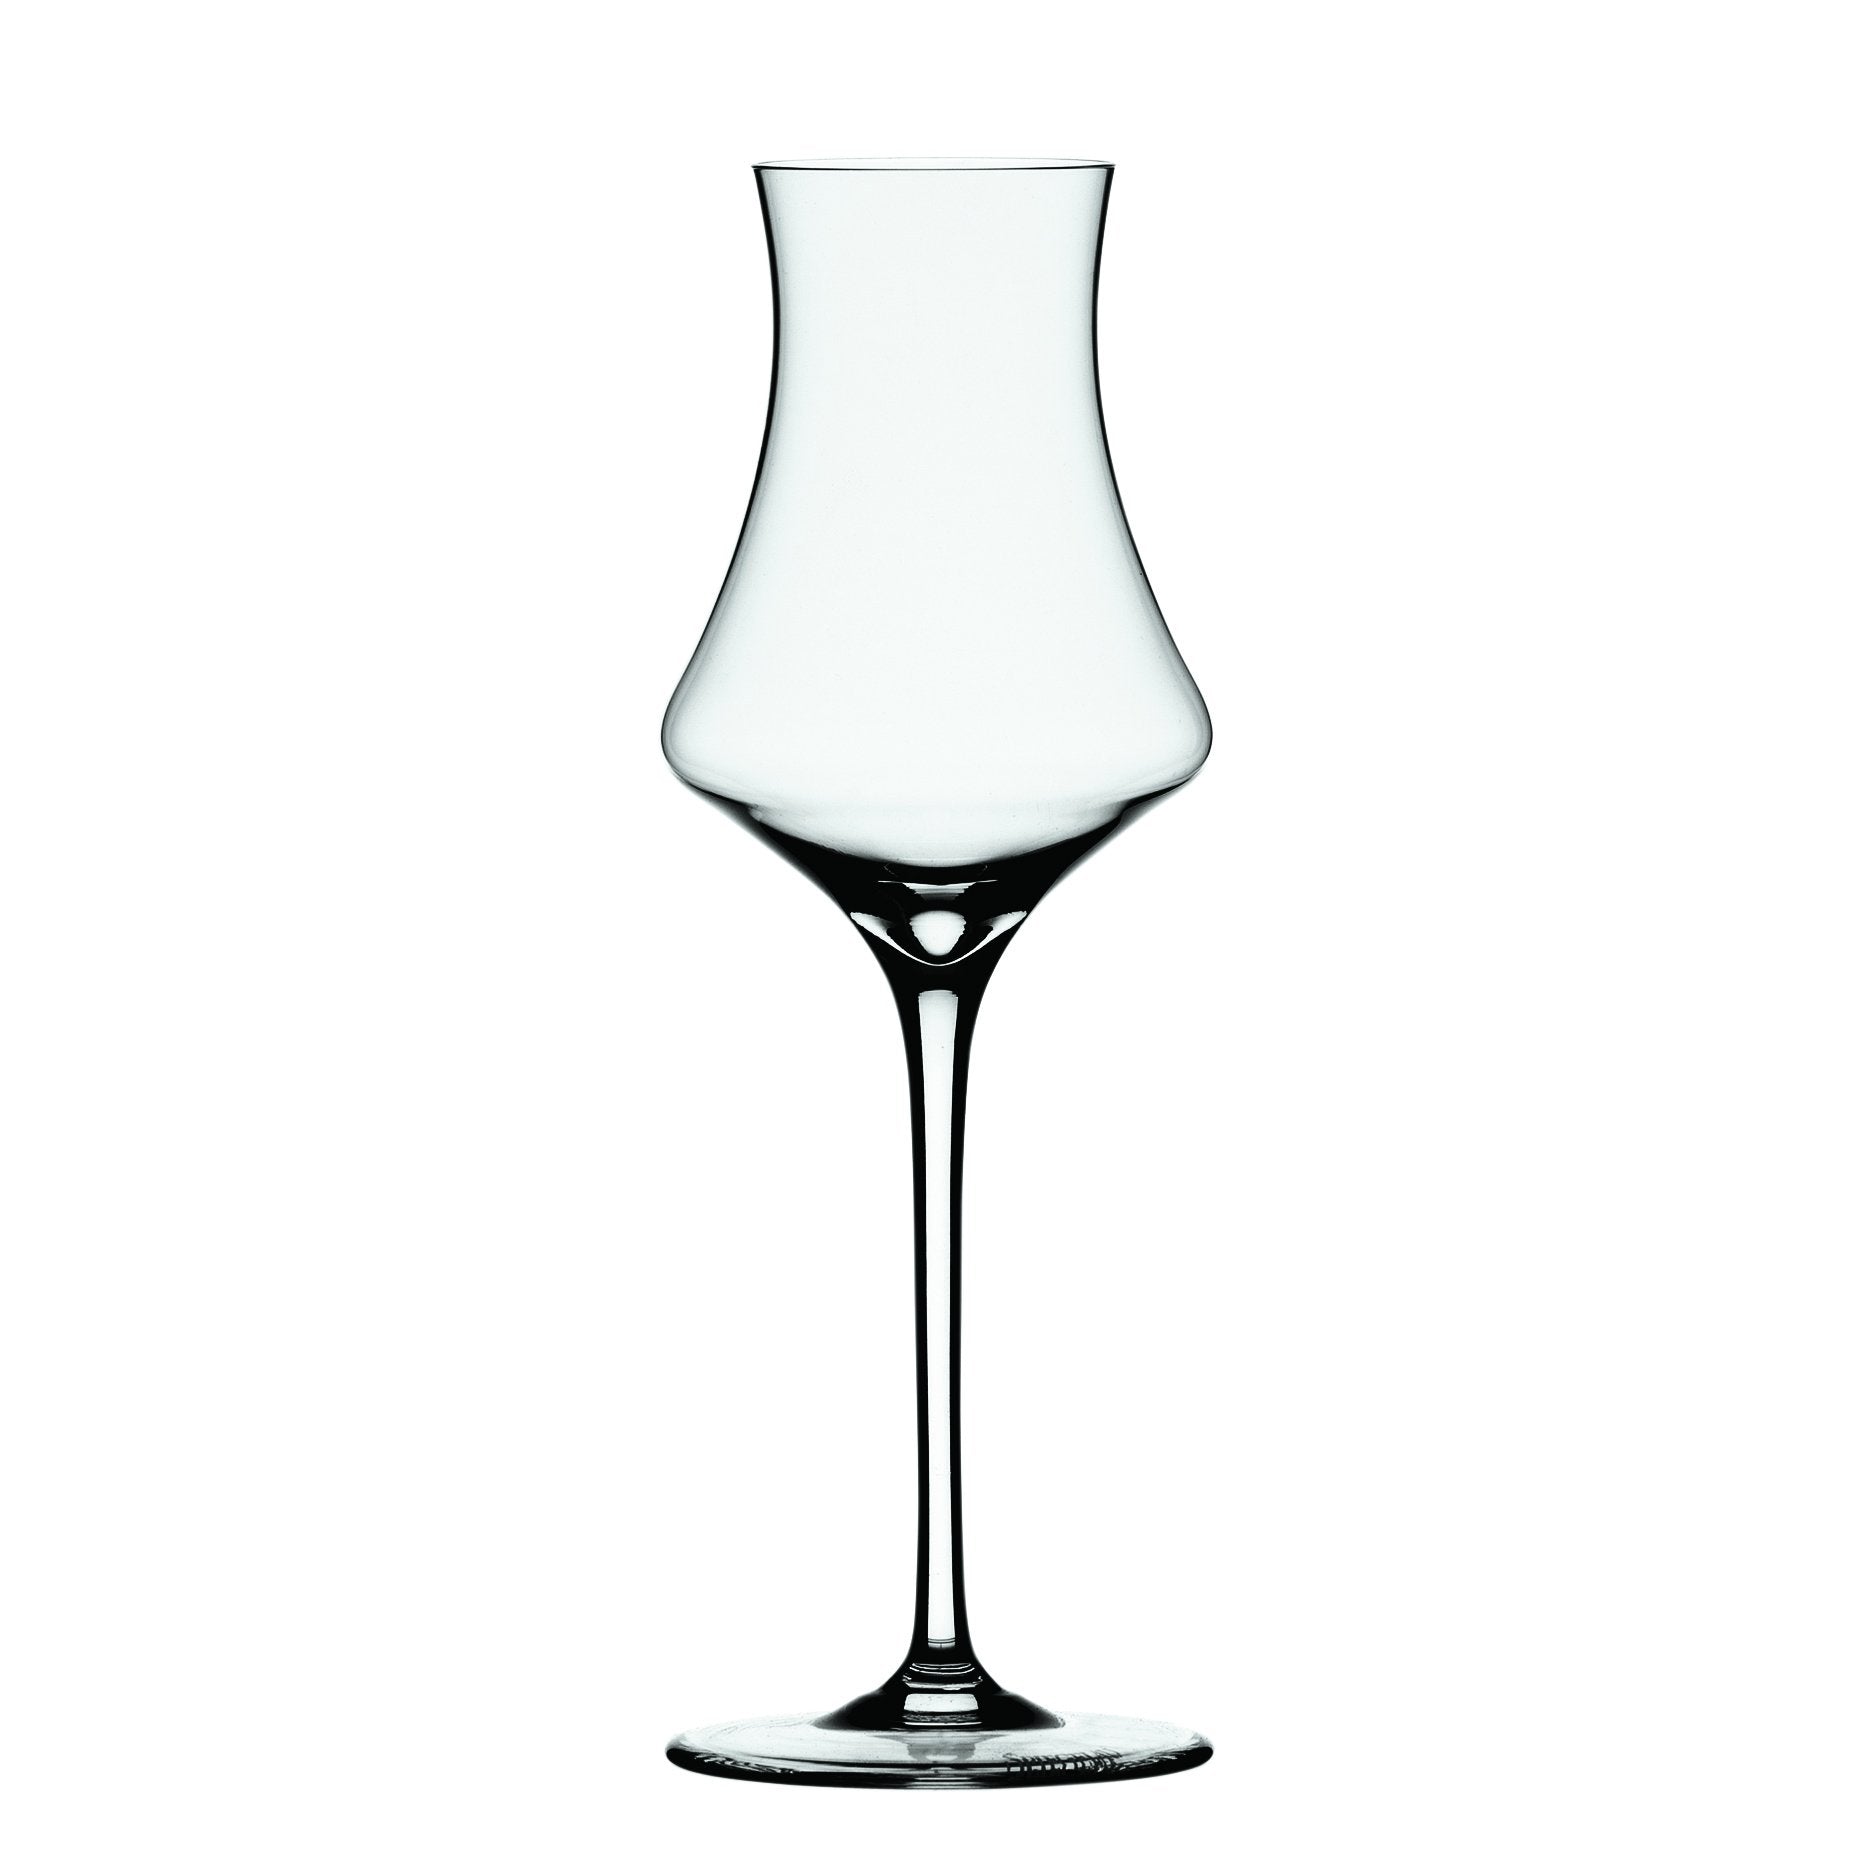 Spiegelau Willsberger 9.9 oz Digestive glass - set of 4-Drinkware-TrueBrands-VinGrotto Wine Cellar Construction Company